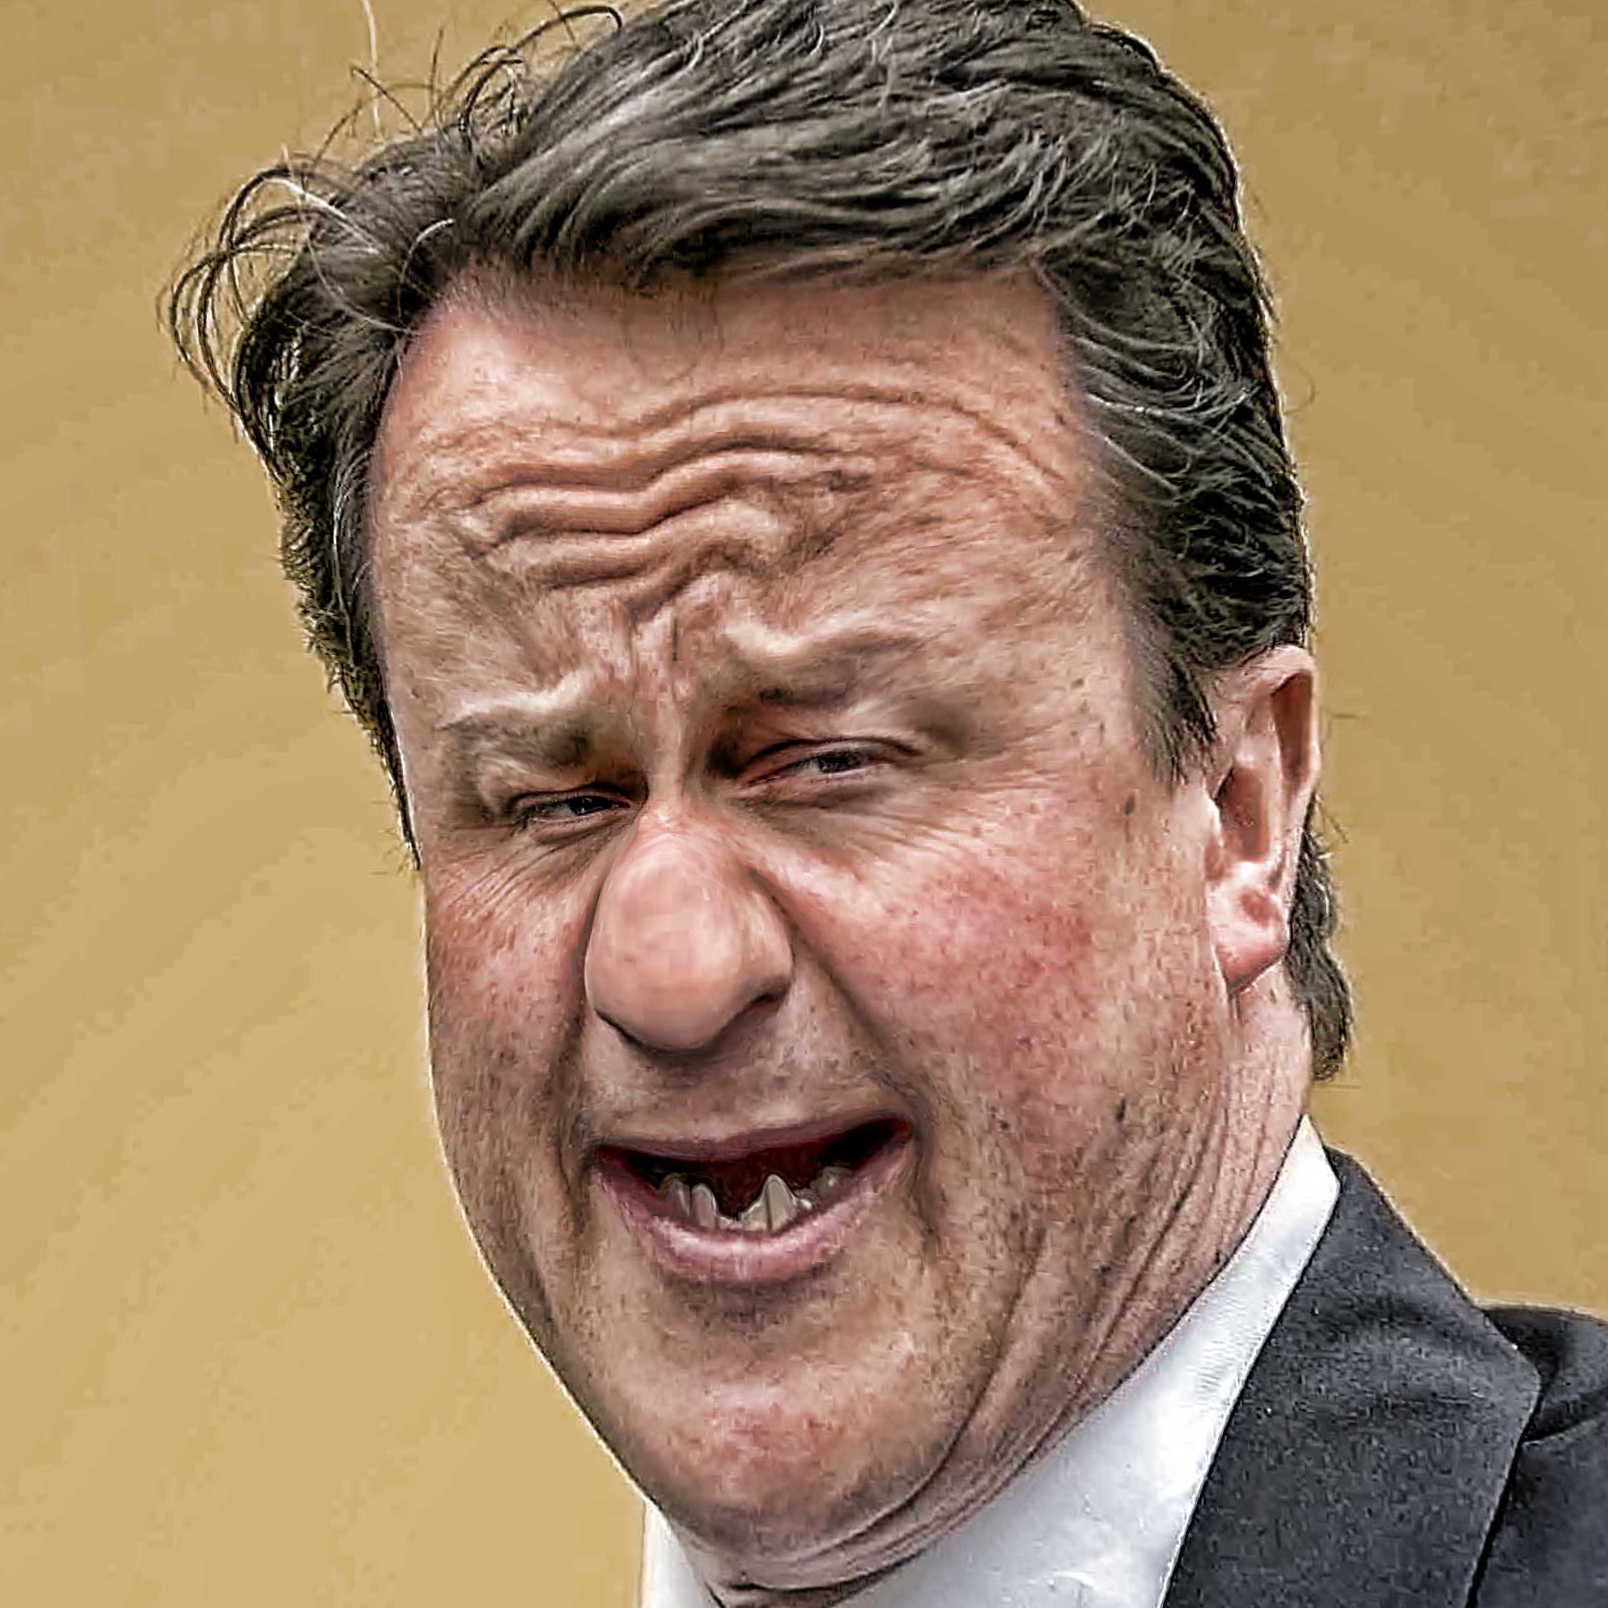 David Cameron englischer Premierminister will ueber EU Austritt abstimmen lassen